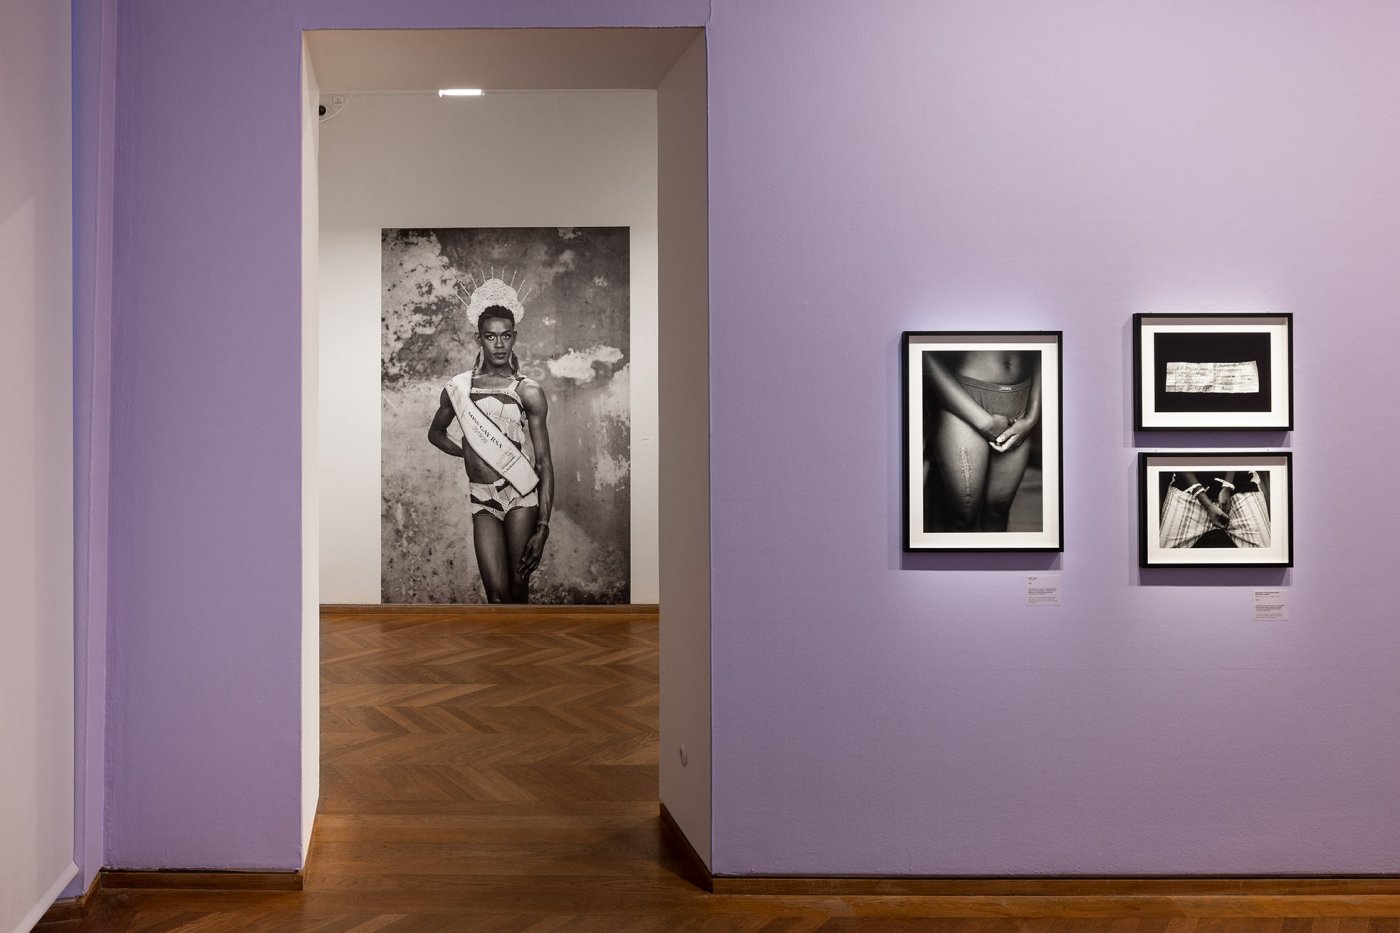 Installation image for Zanele Muholi, at MEP - Maison Européenne de la Photographie